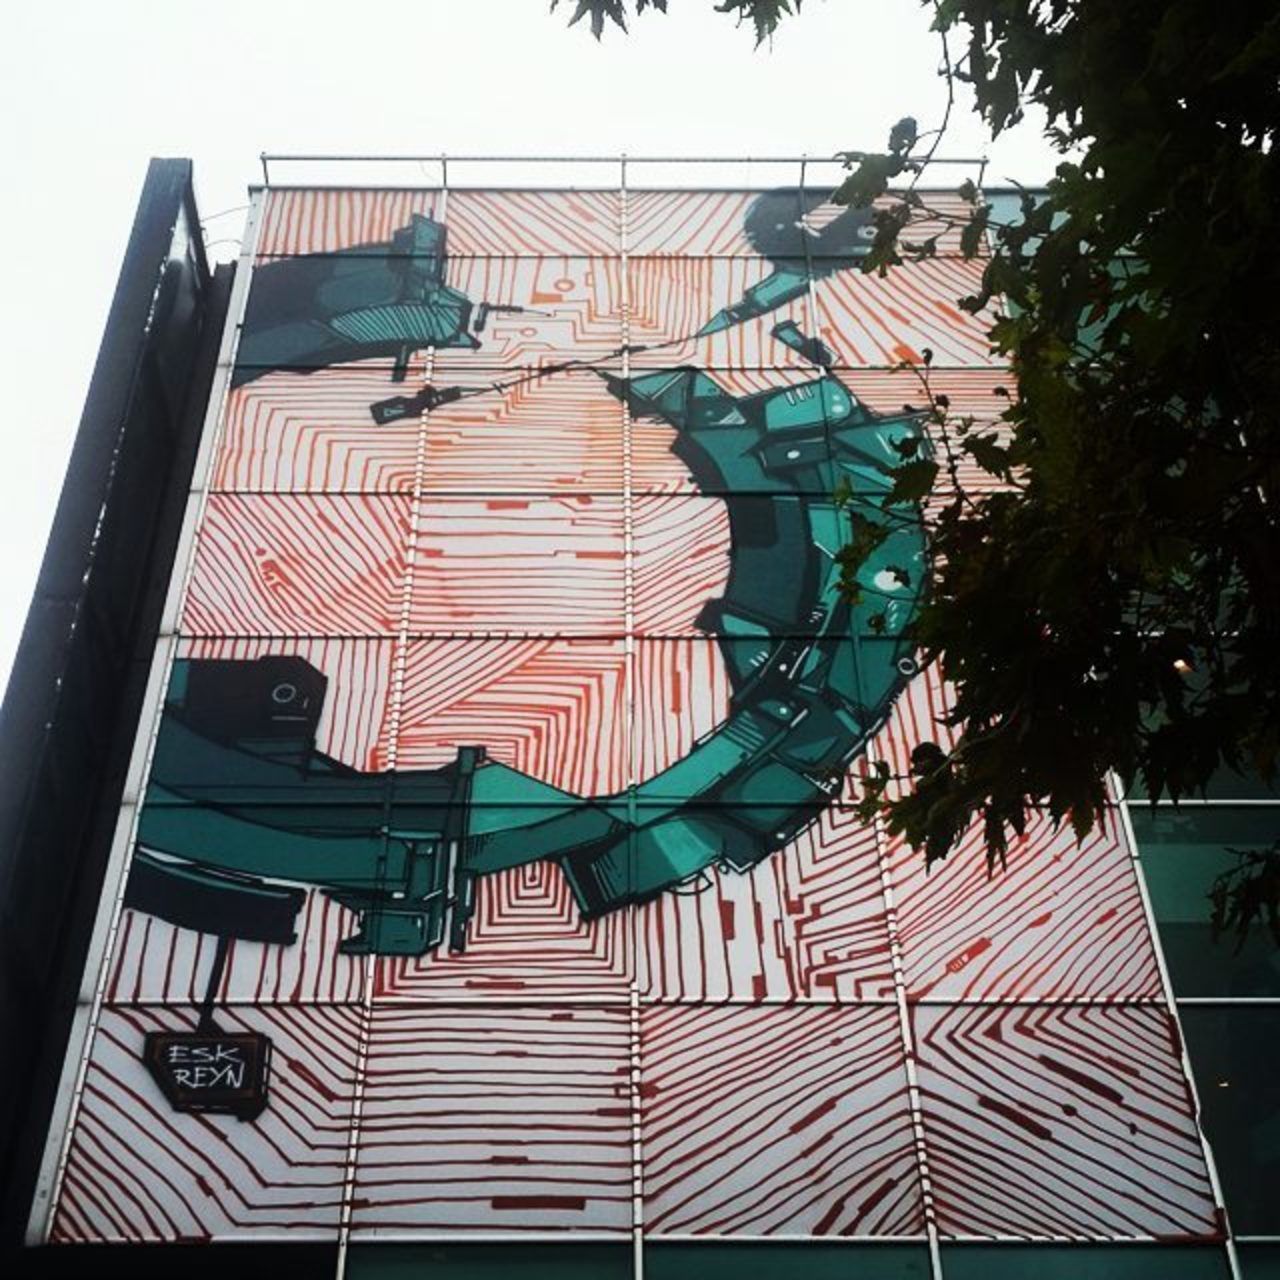 gri güne renk katanlar... #eskreyn #streetart #streetartistanbul #wallart #mural #graffiti #graffitiigers by bahar_… https://t.co/DwJKdkAz9X